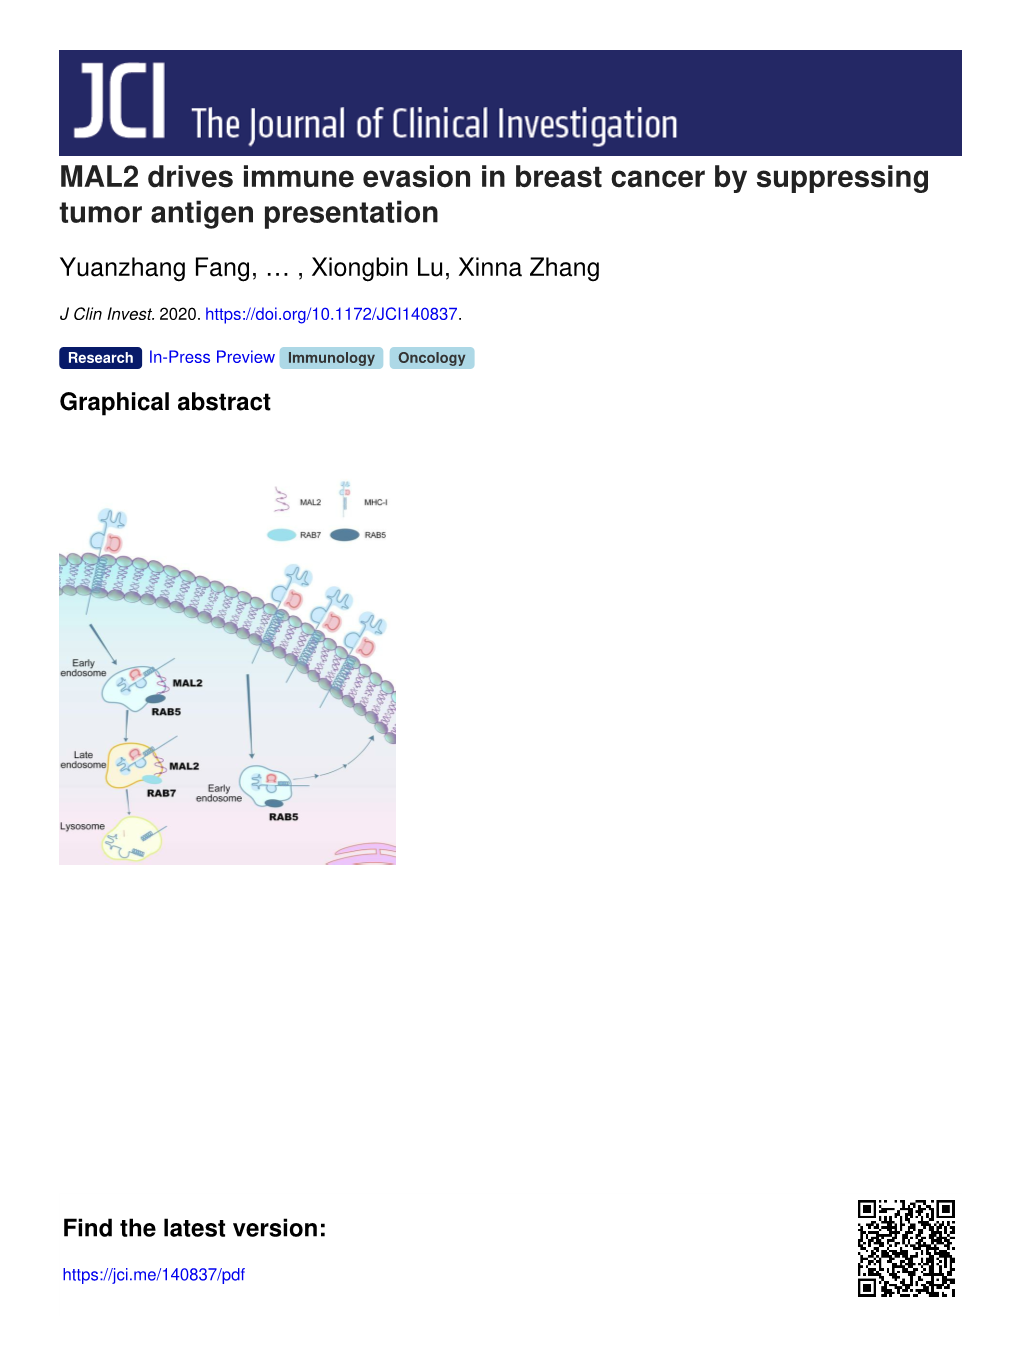 MAL2 Drives Immune Evasion in Breast Cancer by Suppressing Tumor Antigen Presentation